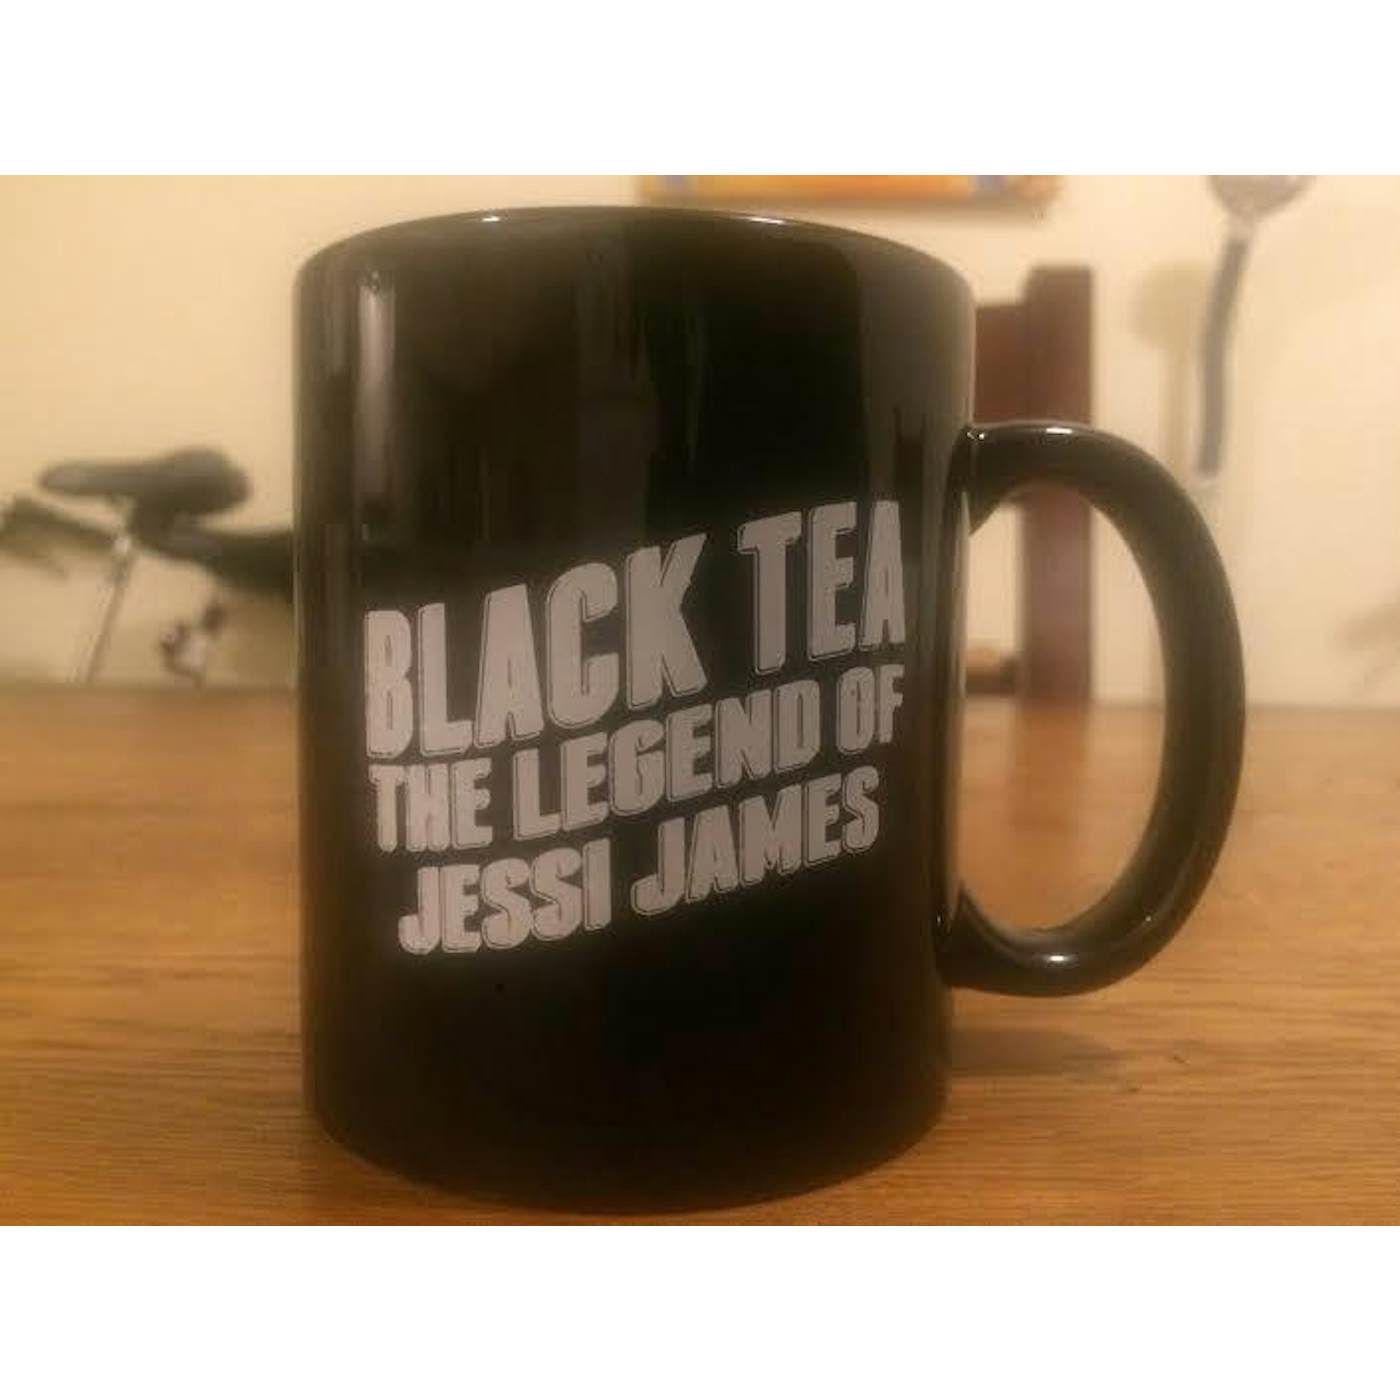 jessica Care moore Black Tea Mug